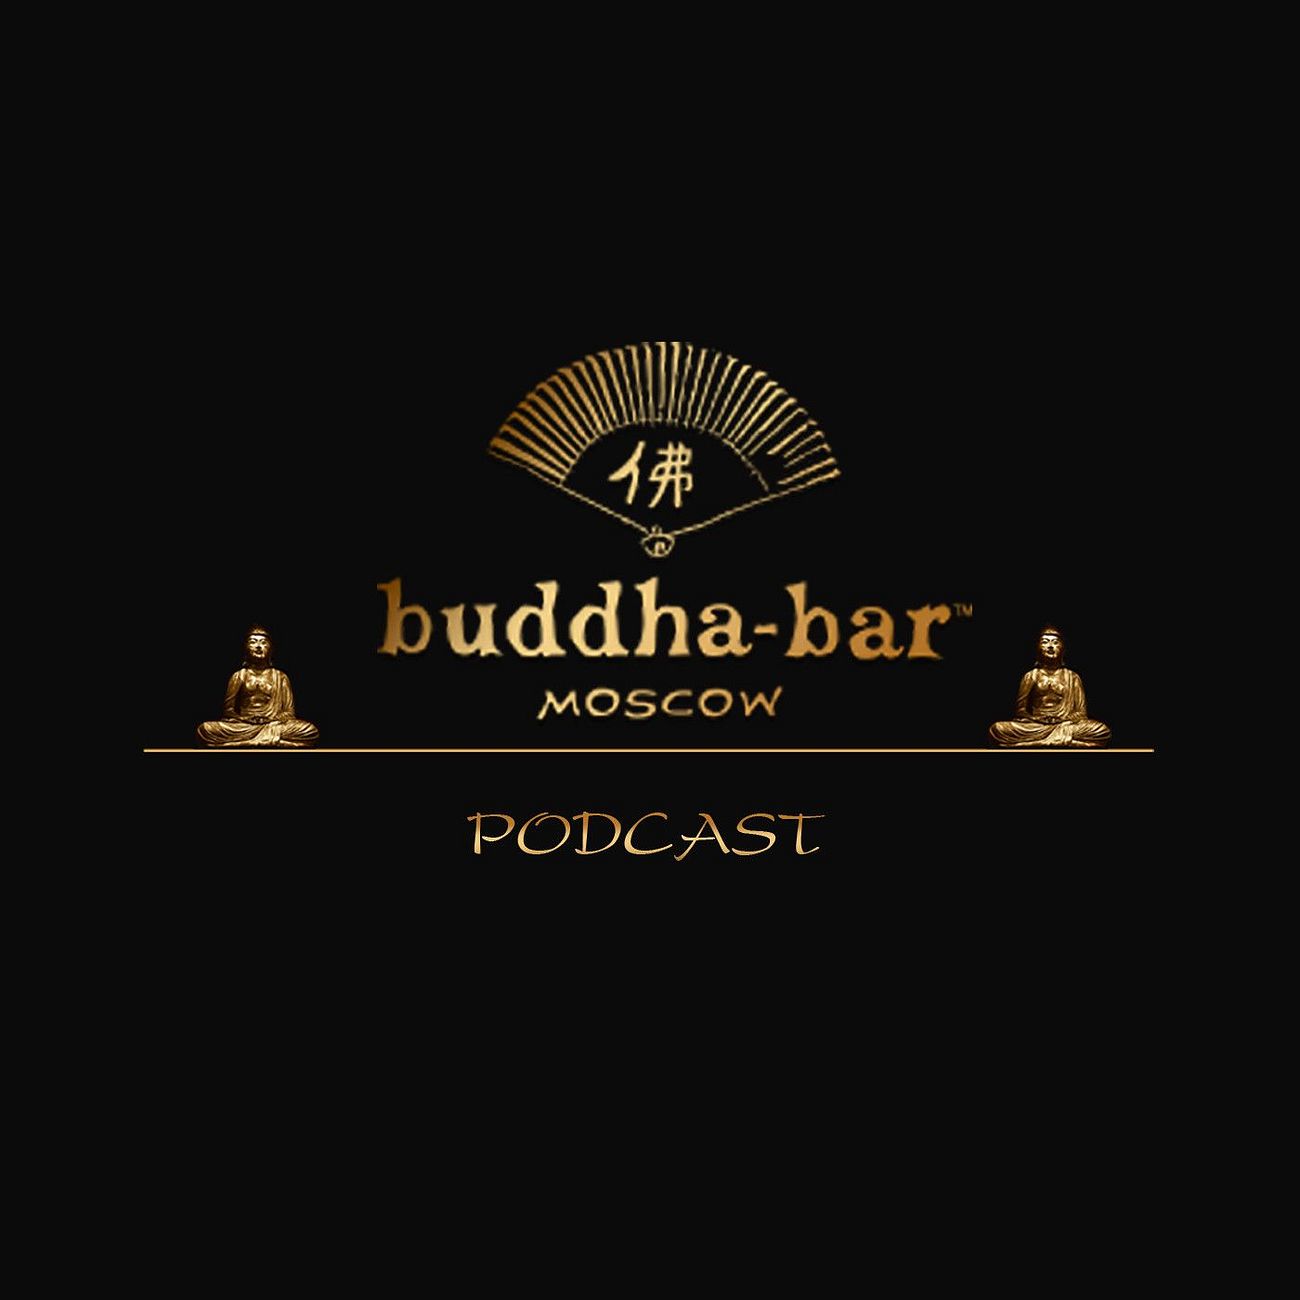 Buddha bar Moscow